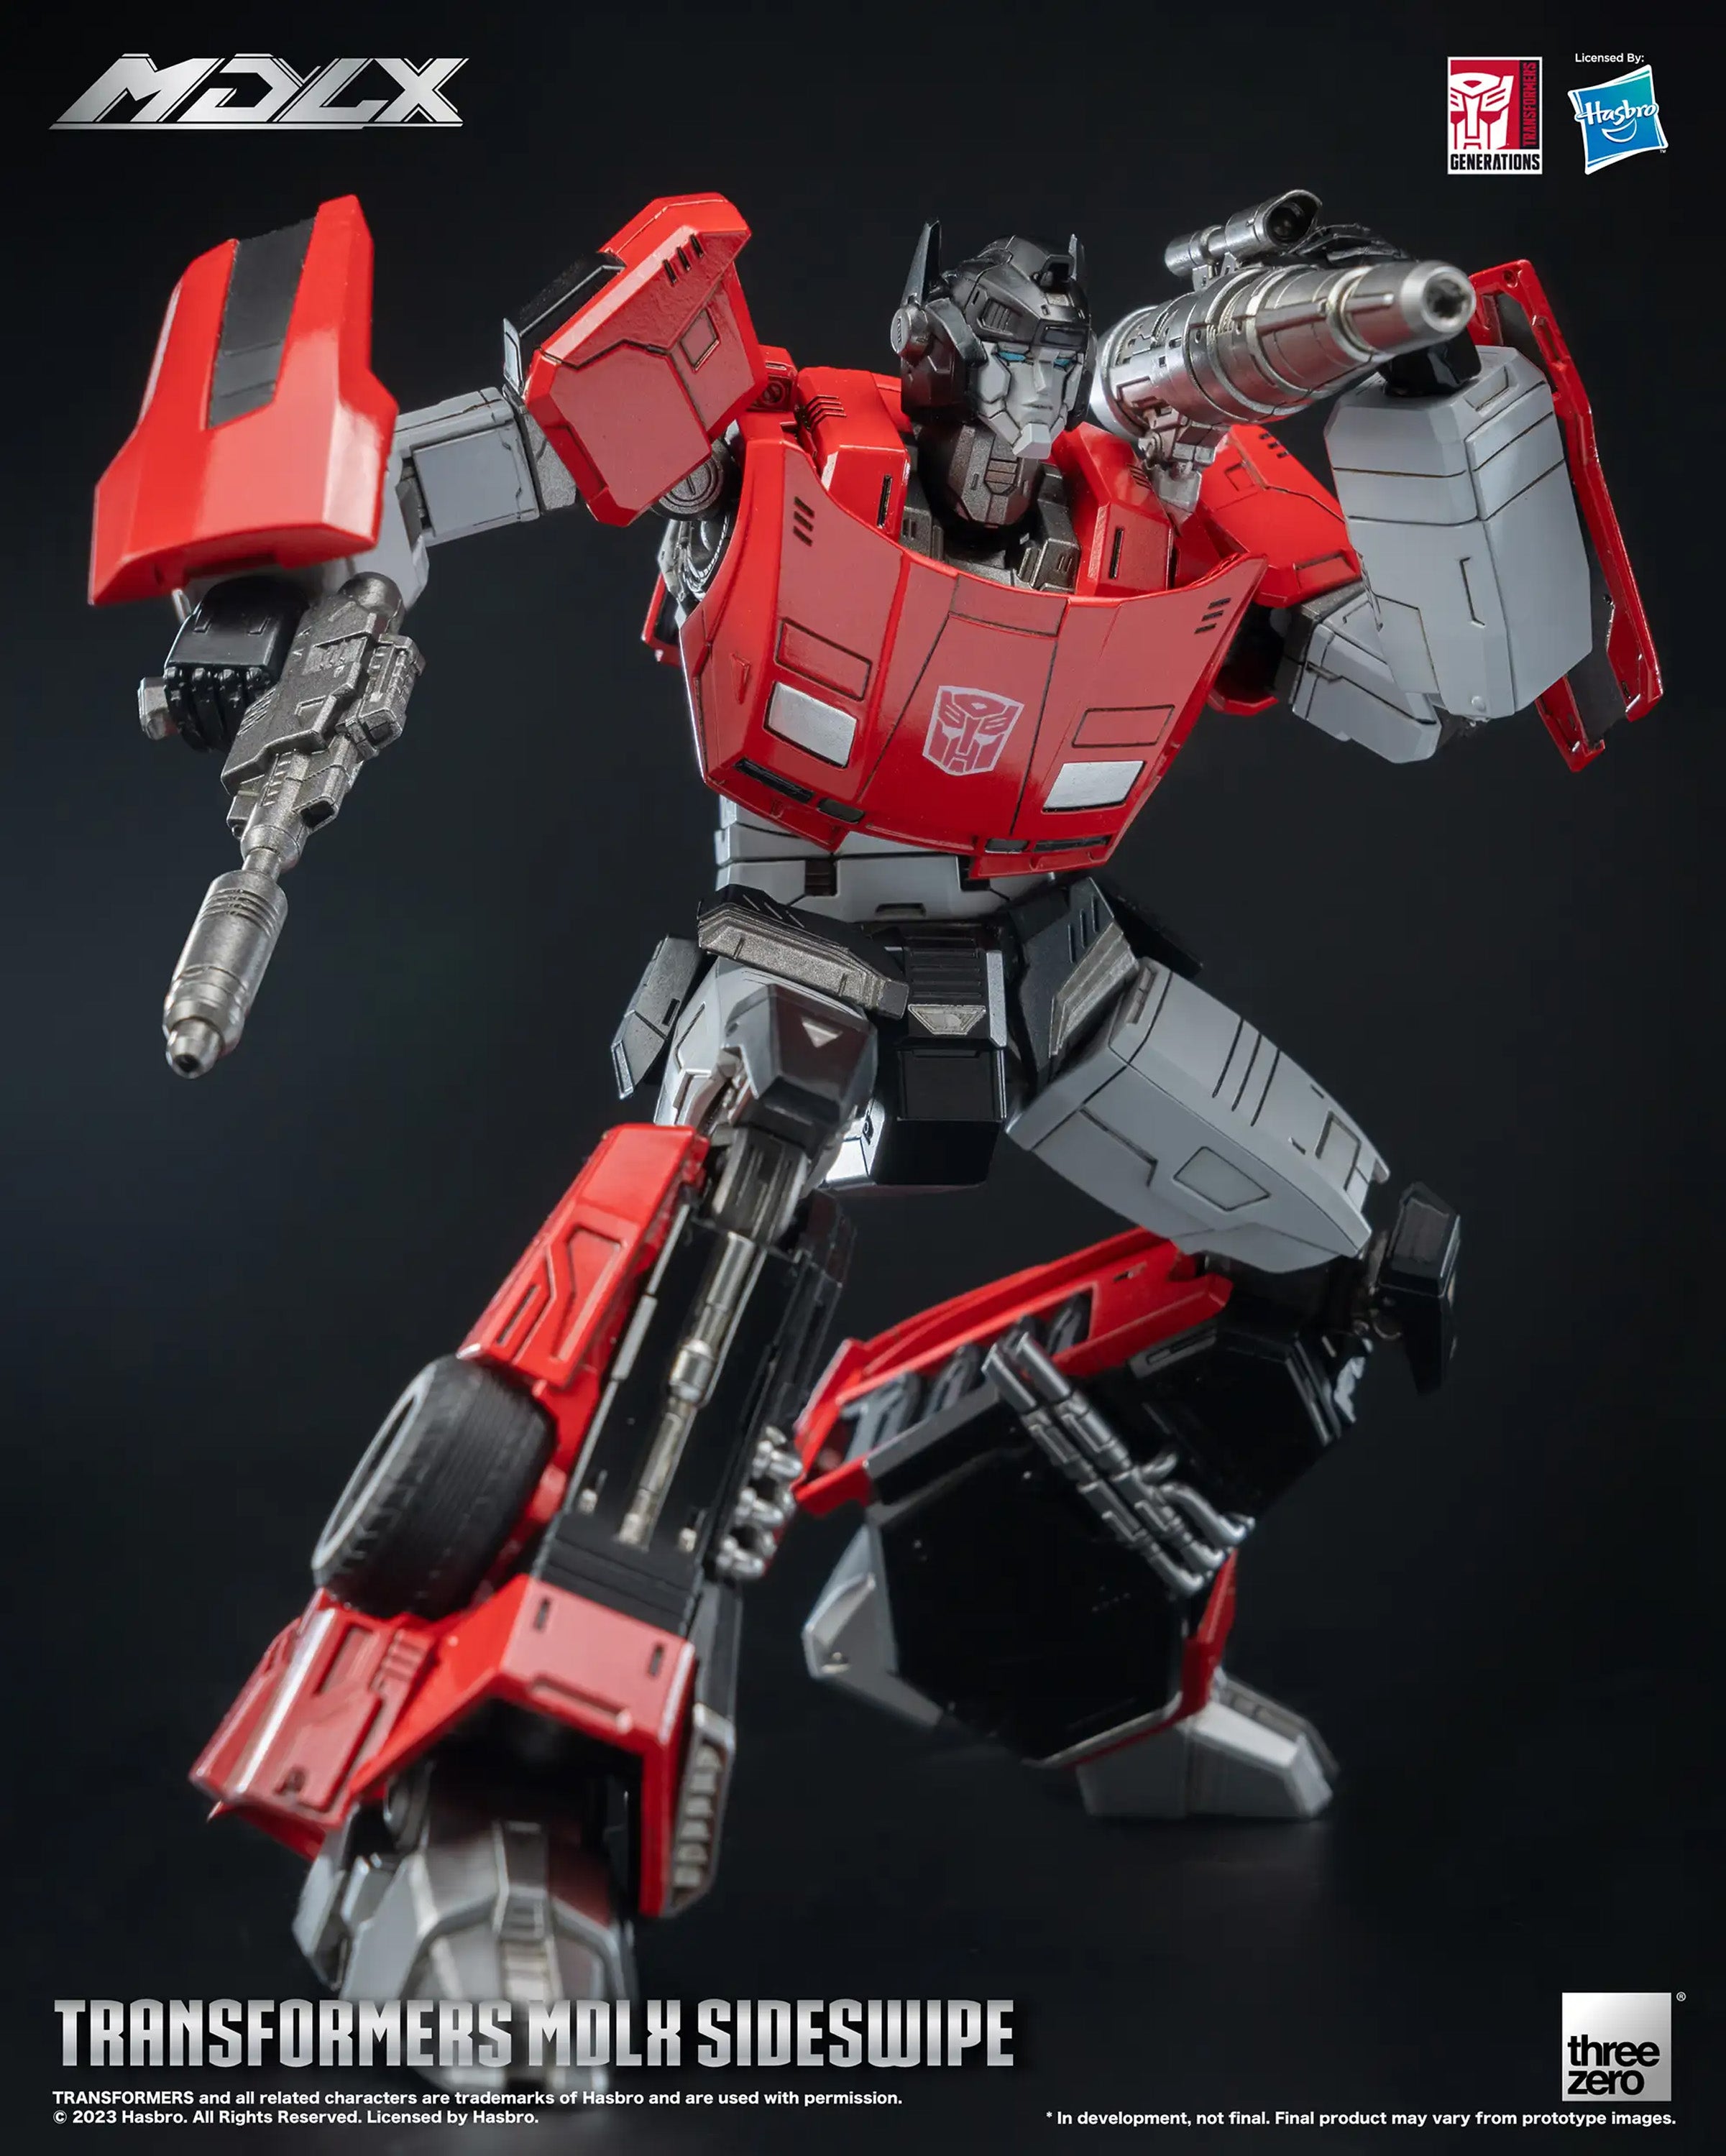 threezero - MDLX - The Transformers - Sideswipe (Kelvin Sau Redesign) - Marvelous Toys